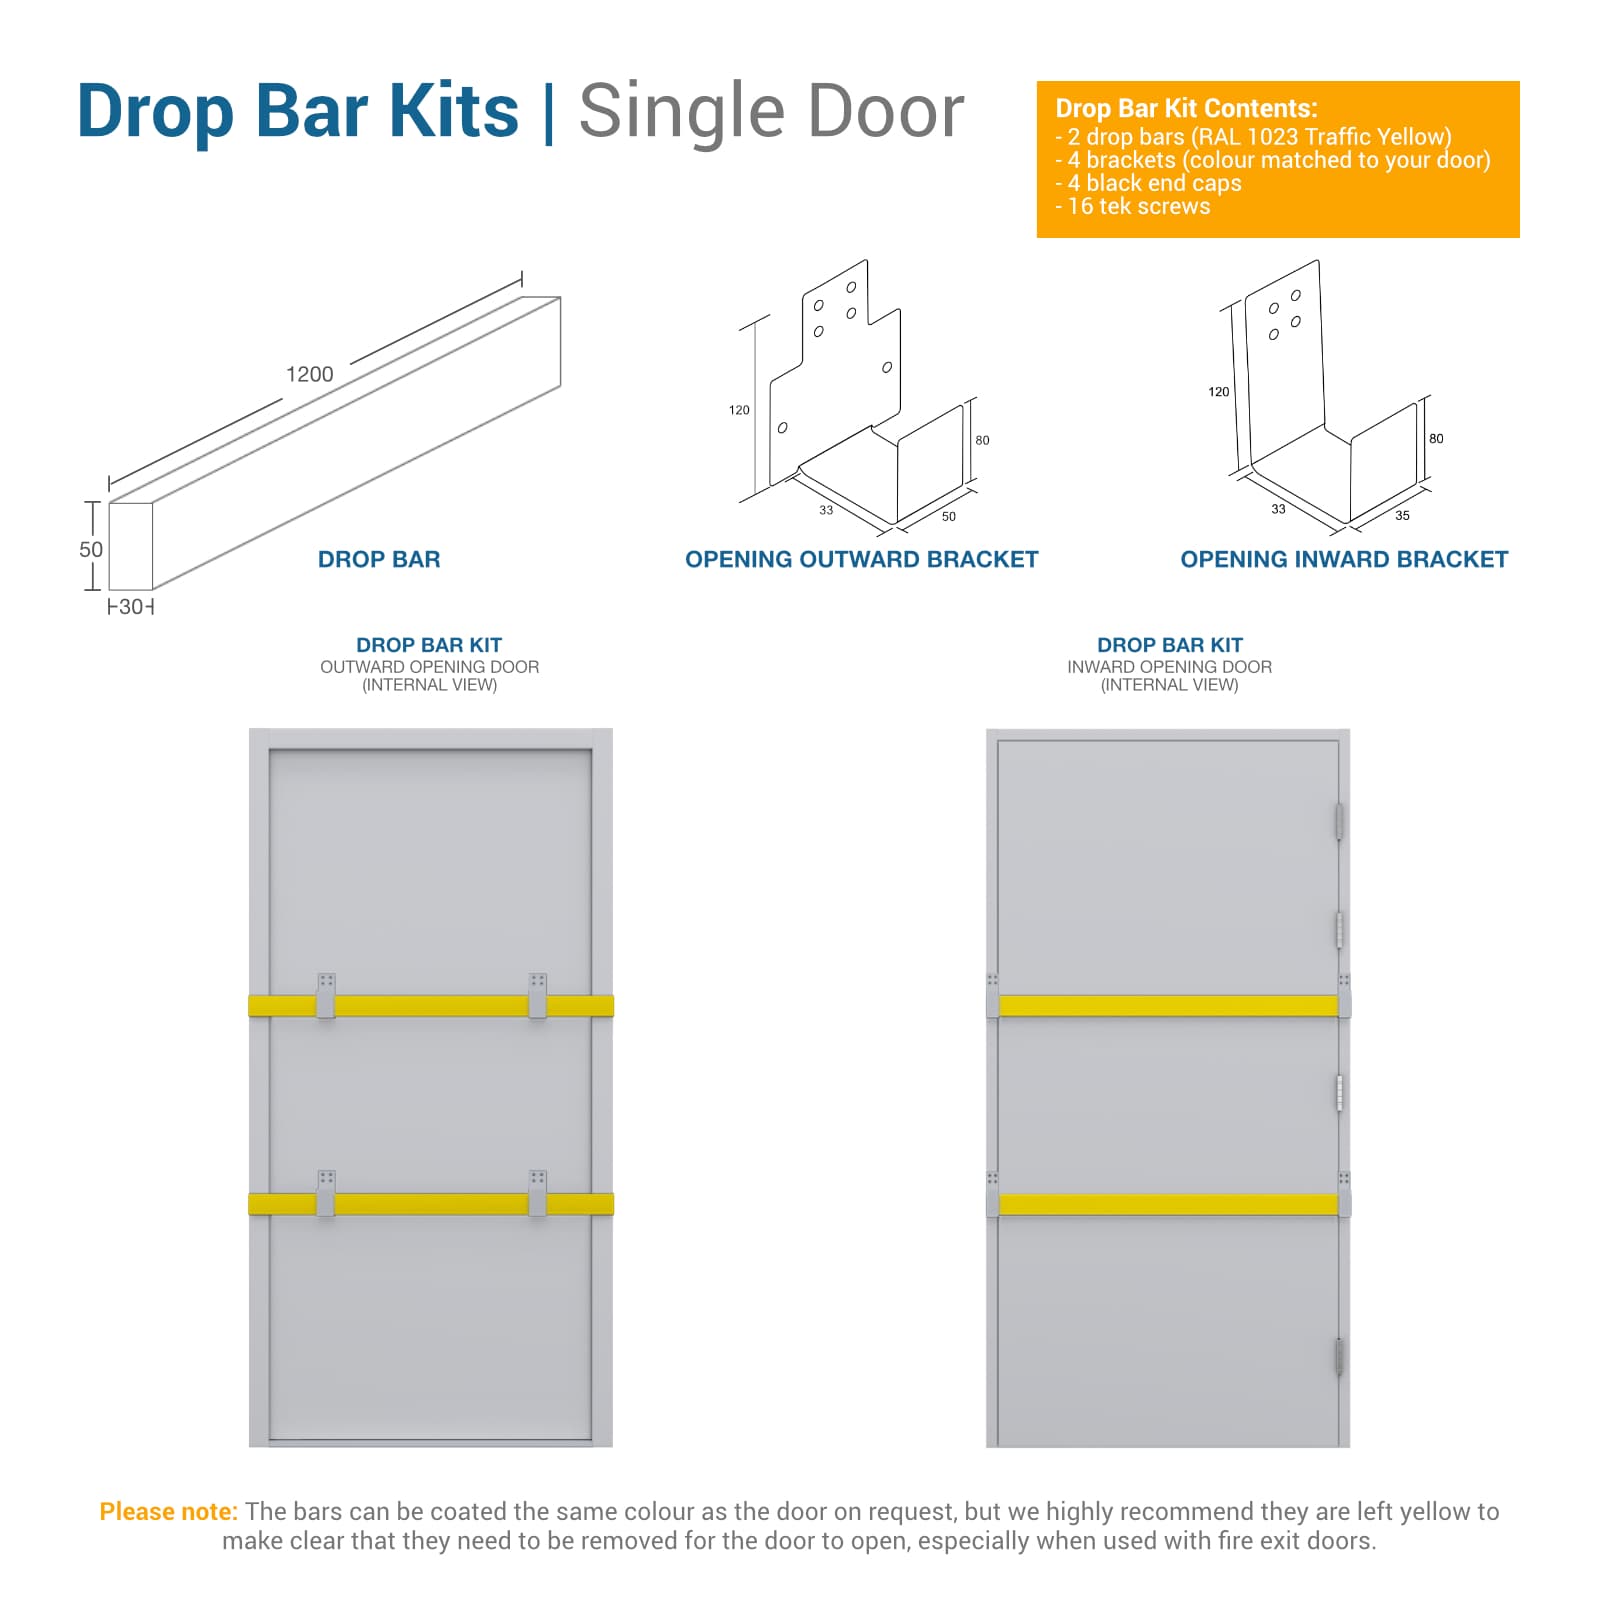 Image showing the contents of a steel door drop bar kit